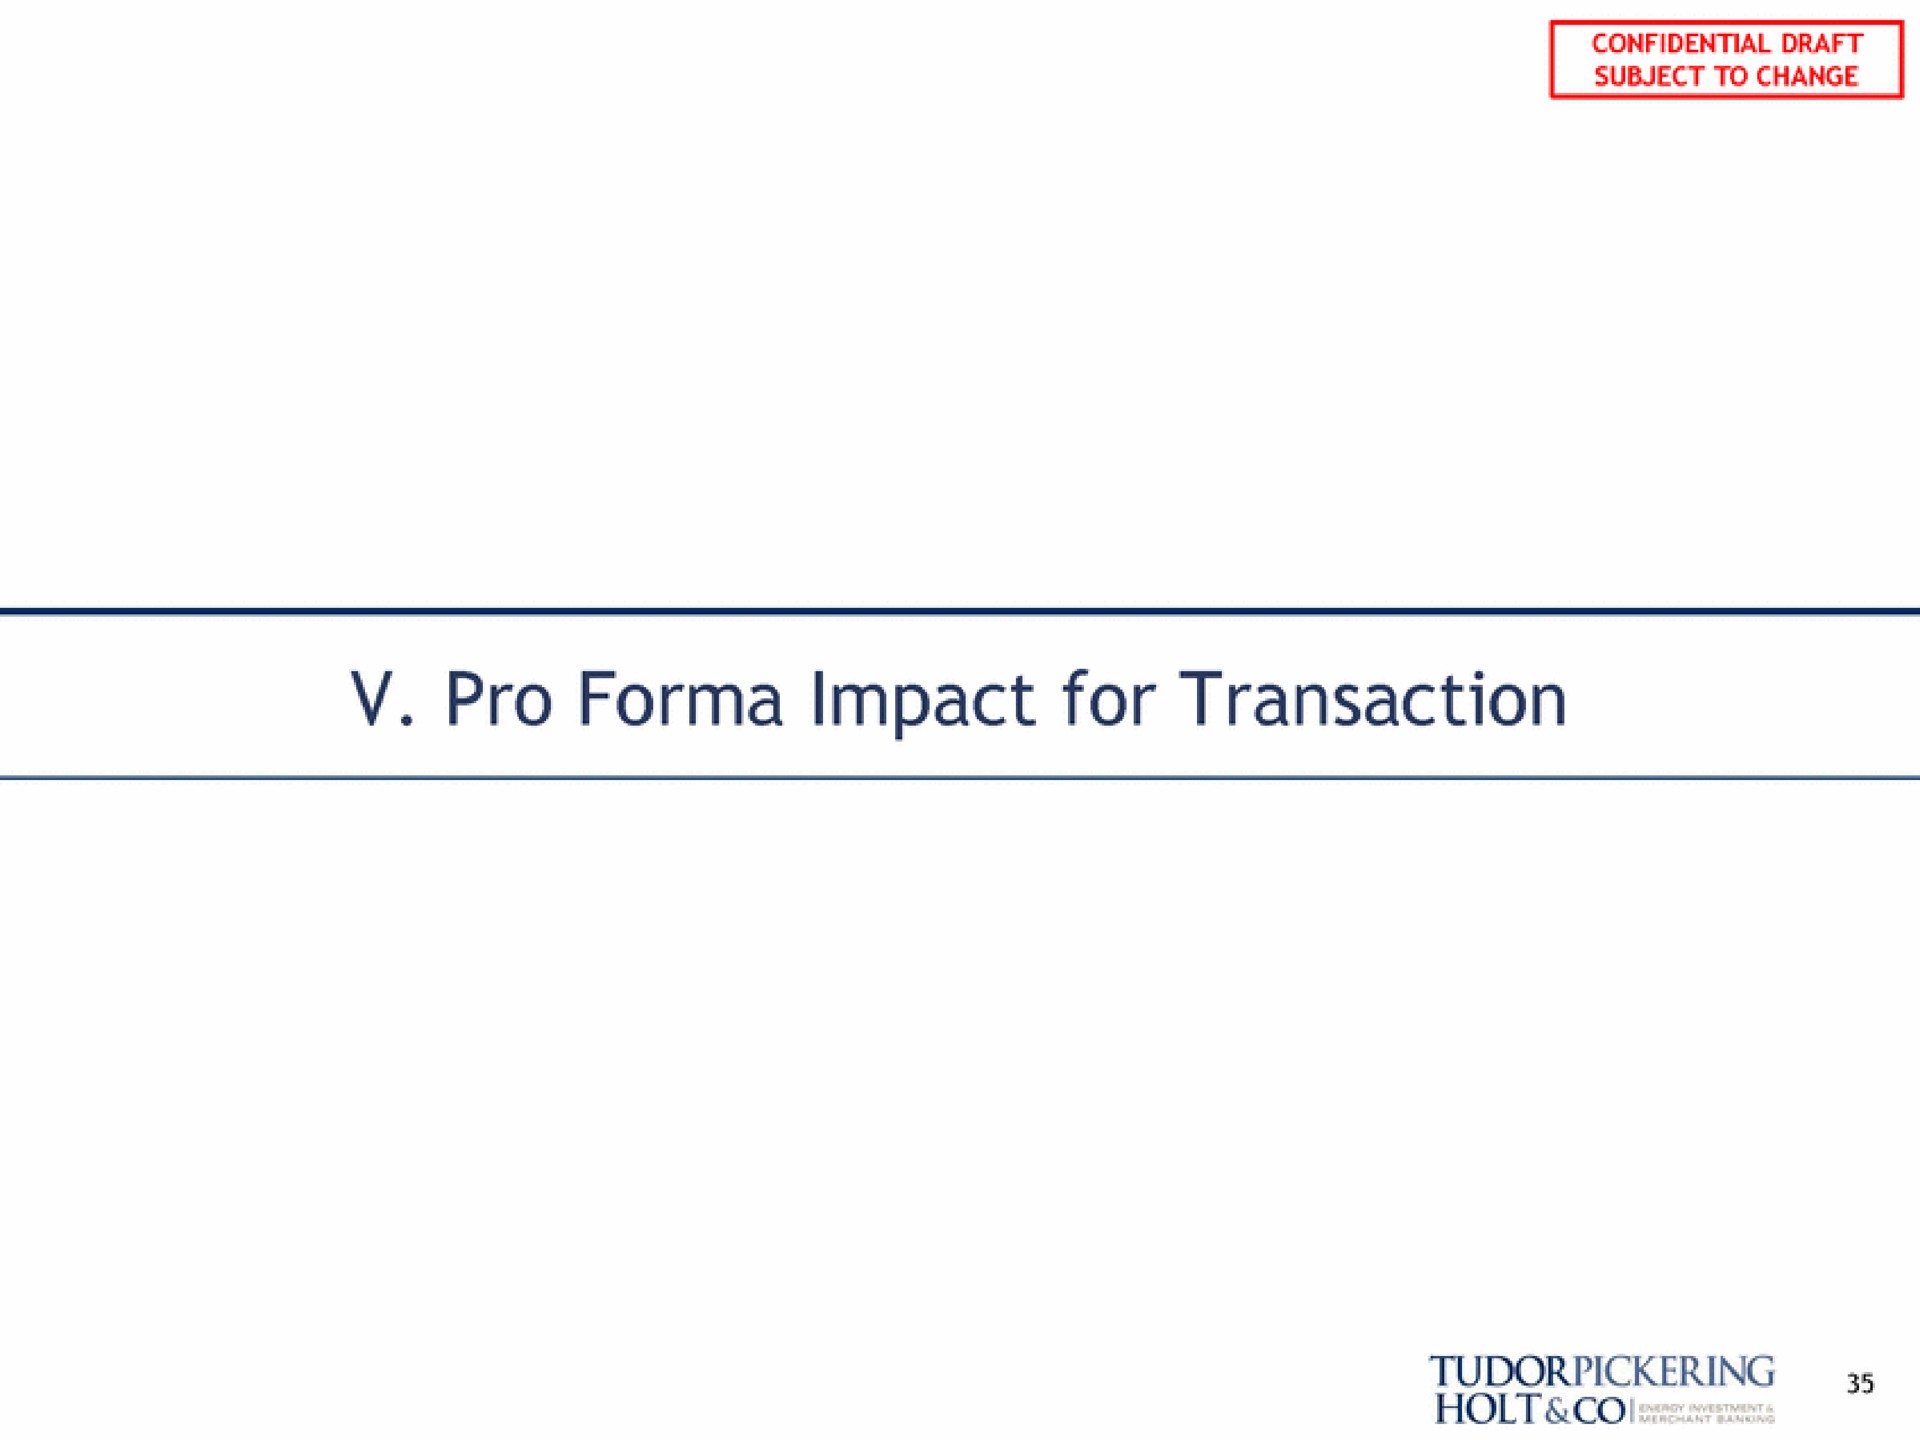 pro impact for transaction | Tudor, Pickering, Holt & Co